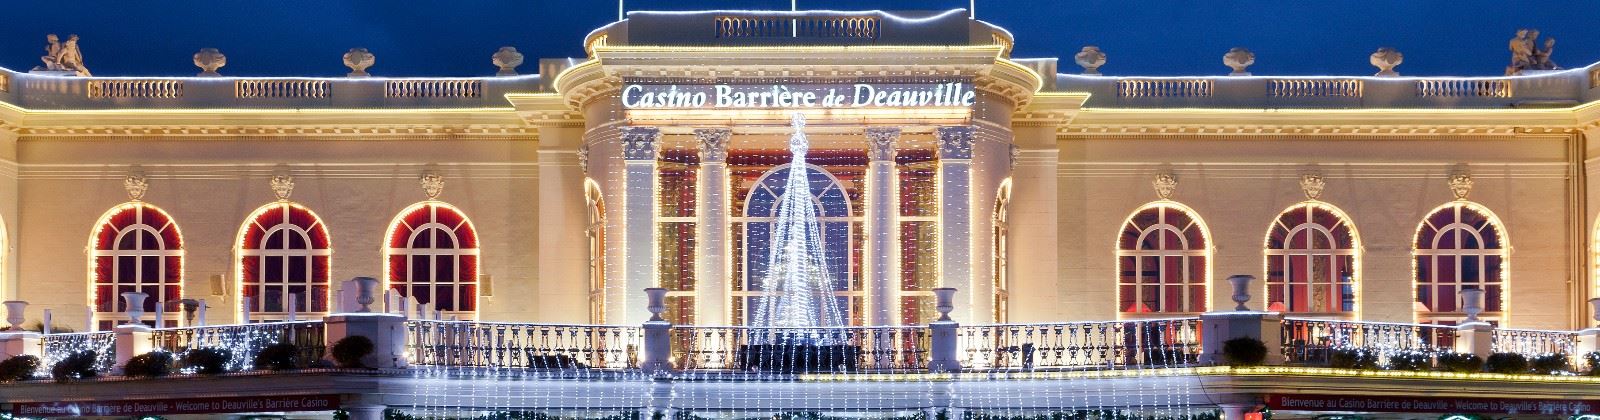 OLEVENE image - casino-barriere-deauville-olevene-organisation-event-